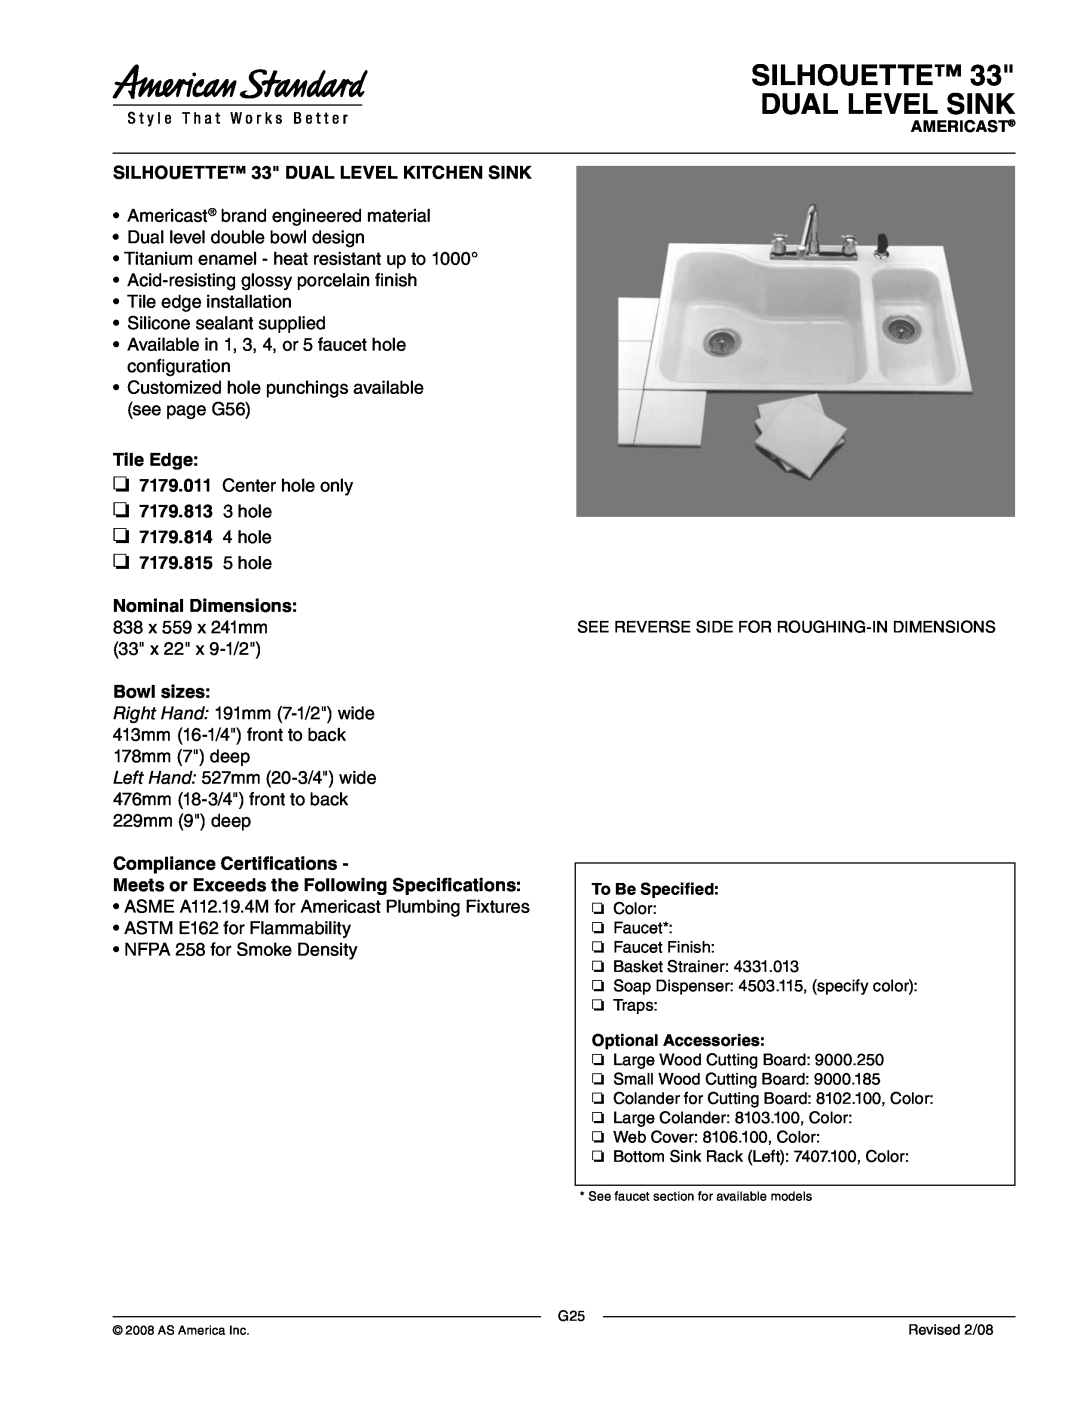 American Standard 7179.815 dimensions Silhouette Dual Level Sink, SILHOUETTE 33 DUAL LEVEL KITCHEN SINK, Tile Edge 